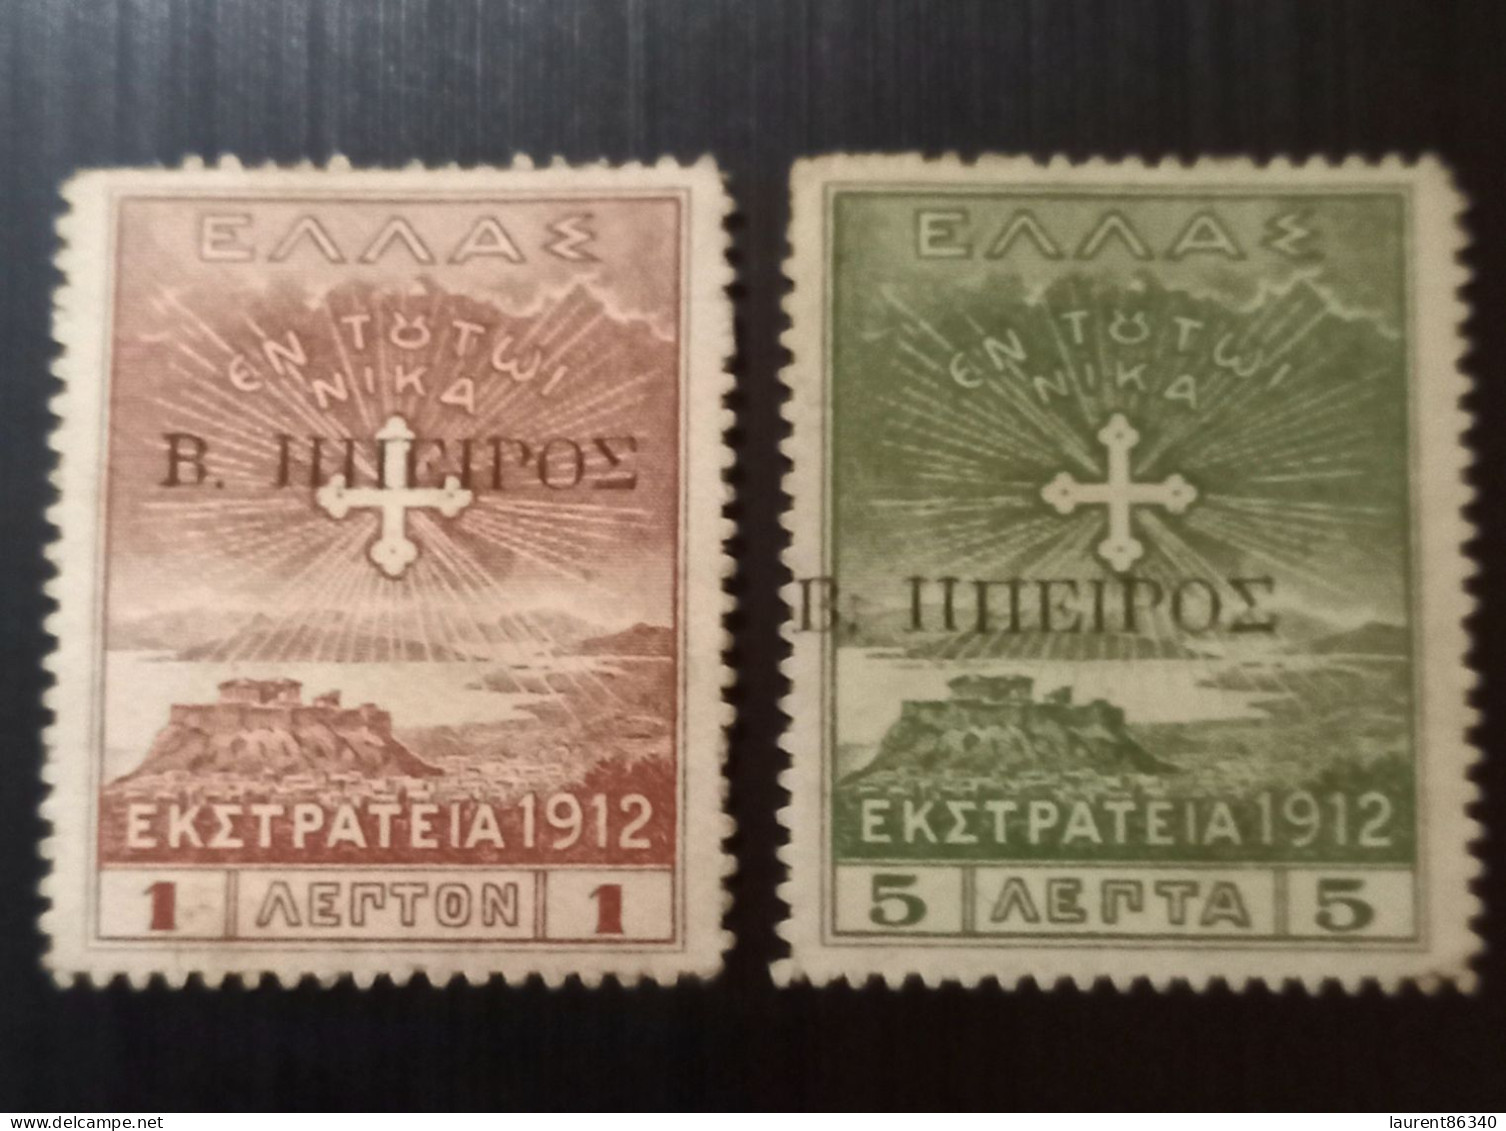 Grèce 1914 Épire Du Nord Occupation Surcharge " Β. ΗΠΕΙΡΟΣ "1915 Greek Postage Stamps Of 1913 Overprinted "B. HΠΕΙΡΟΣ - North Epirus